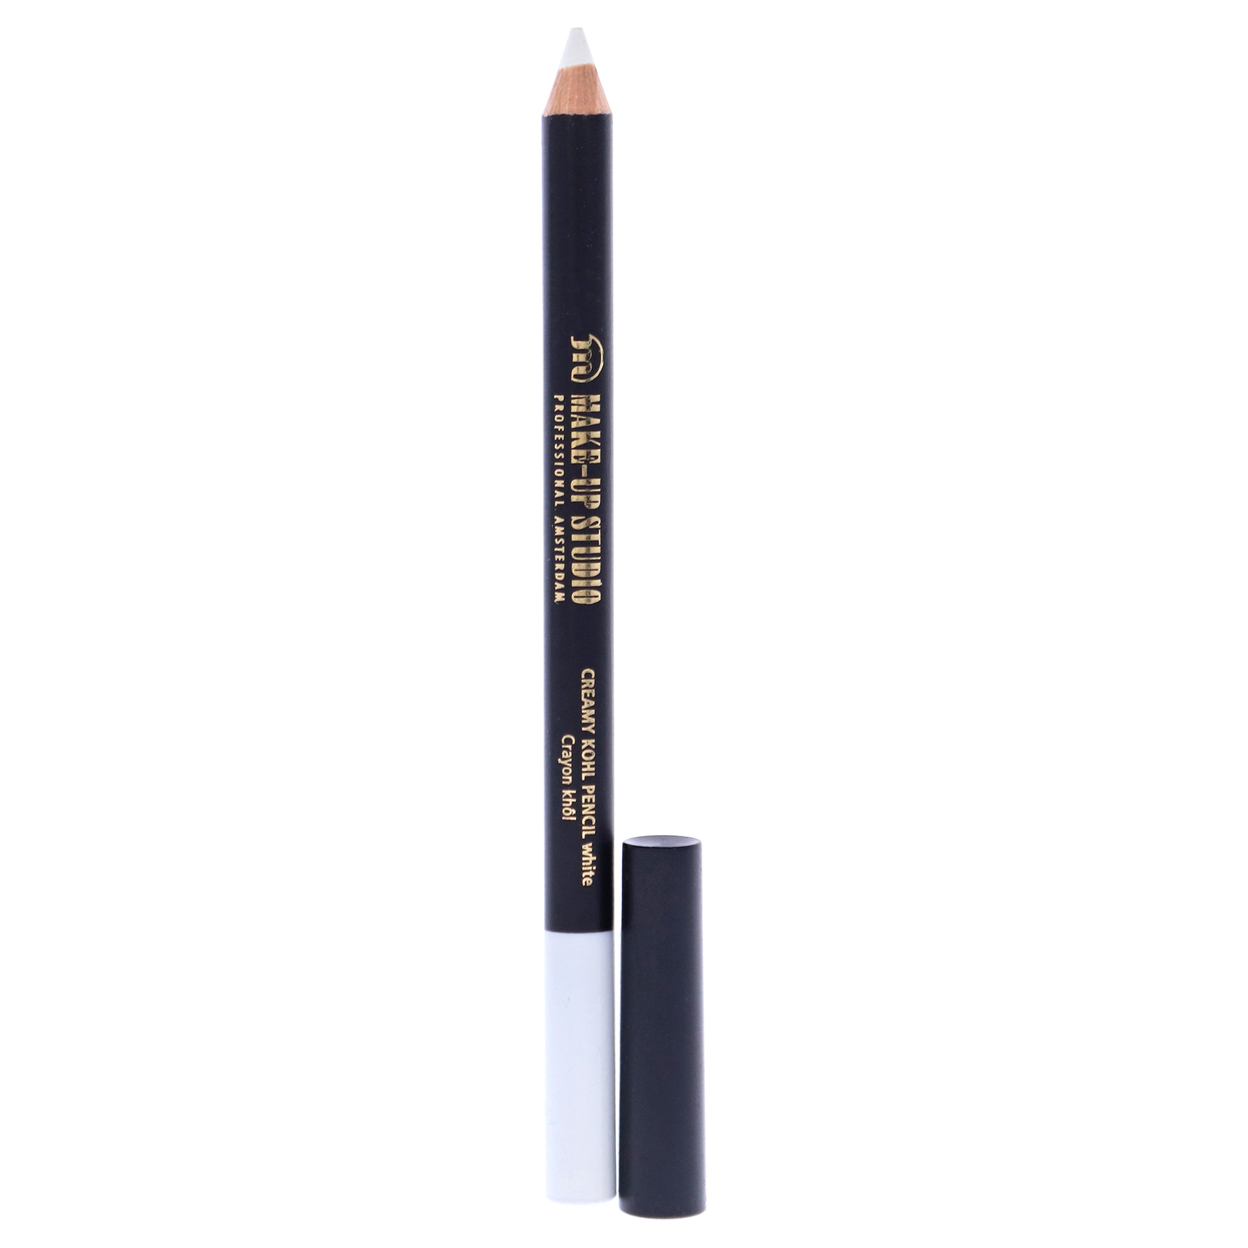 Make-Up Studio Creamy Kohl Pencil Eyeliner - White 1 Pc